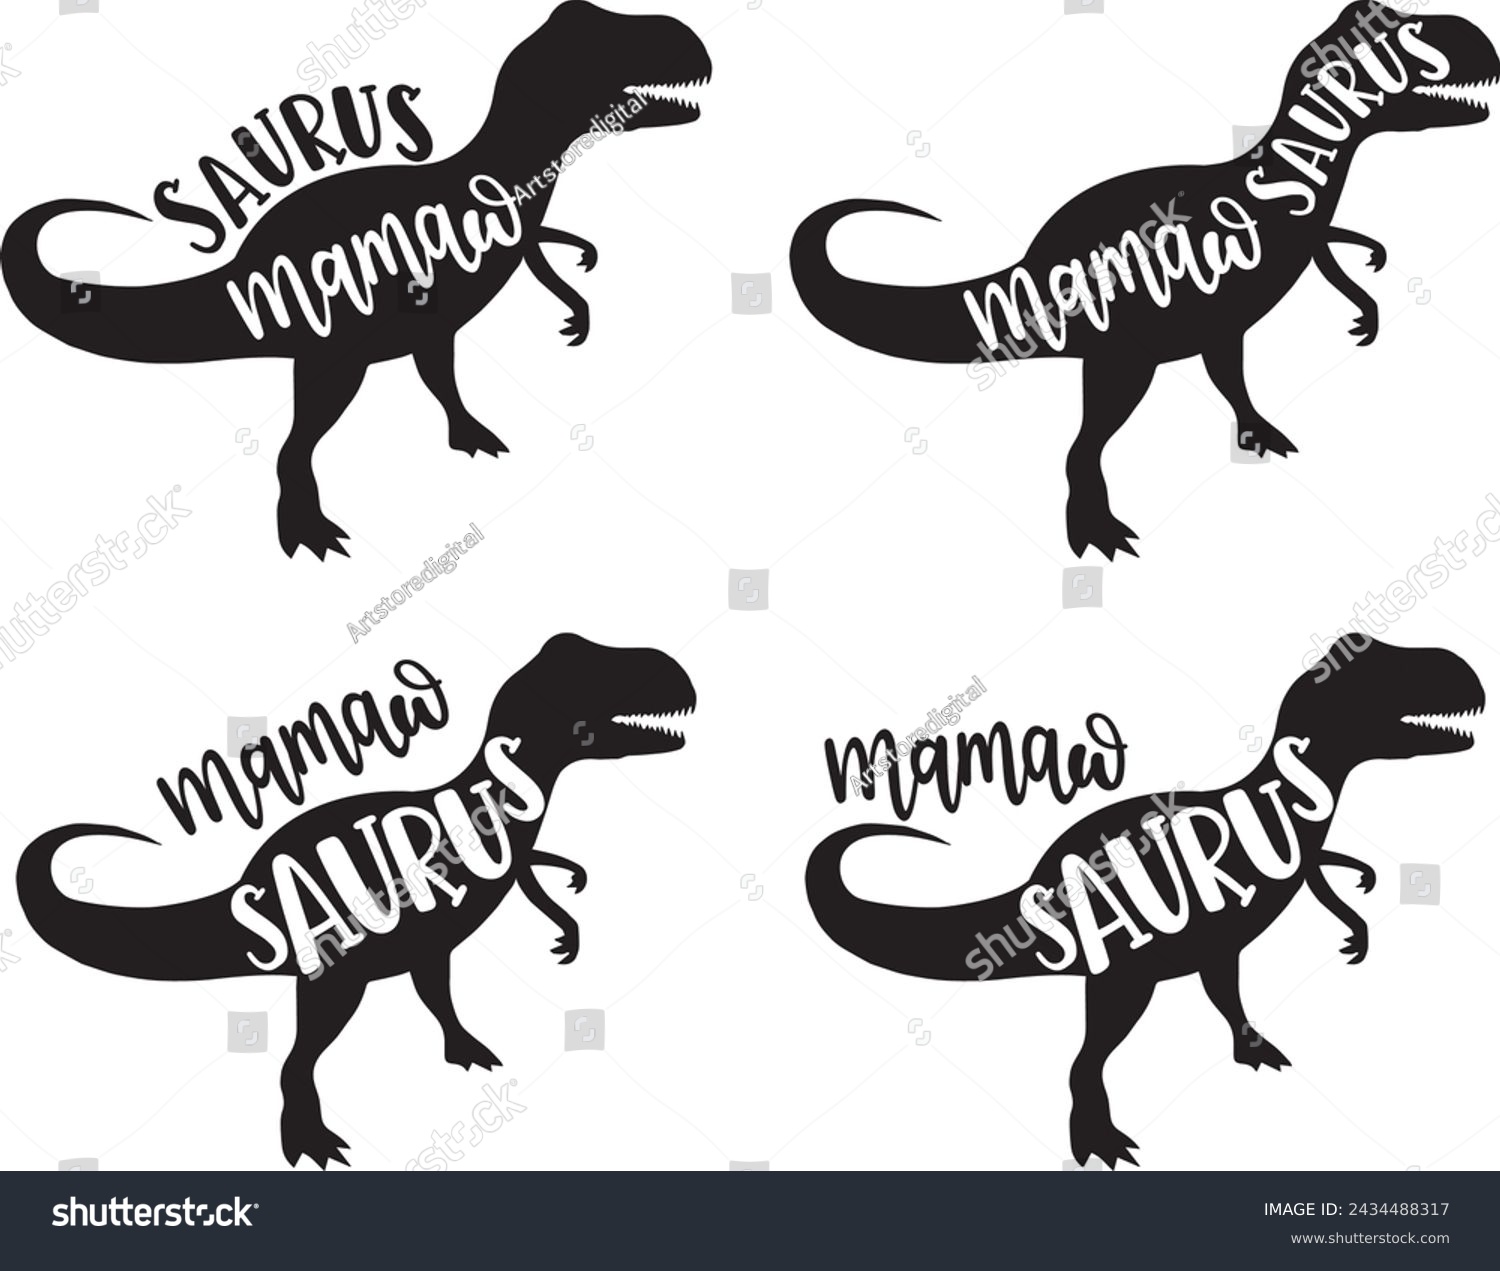 SVG of 4 styles mamaw saurus, family saurus, matching family, dinosaur, saurus, dinosaur family, tRex, dino, t-rex dinosaur vector illustration file svg